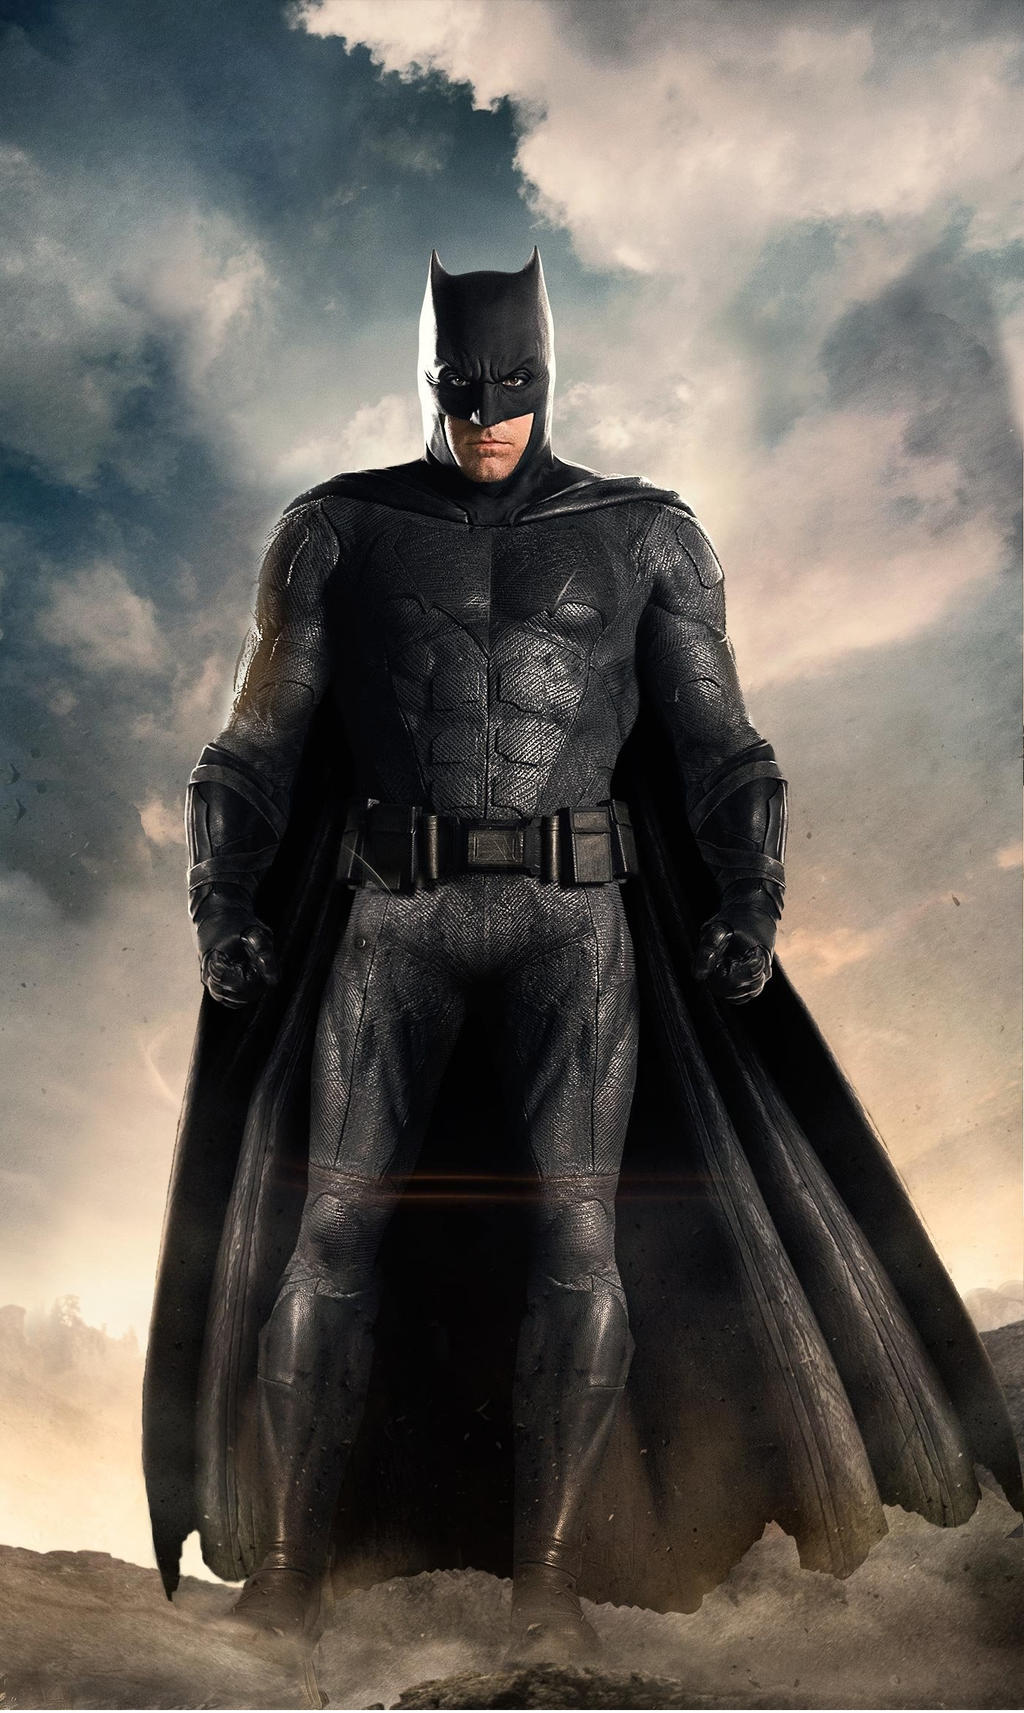 Batman Ben Affleck Standalone Movie Poster by Melciah1791 on DeviantArt